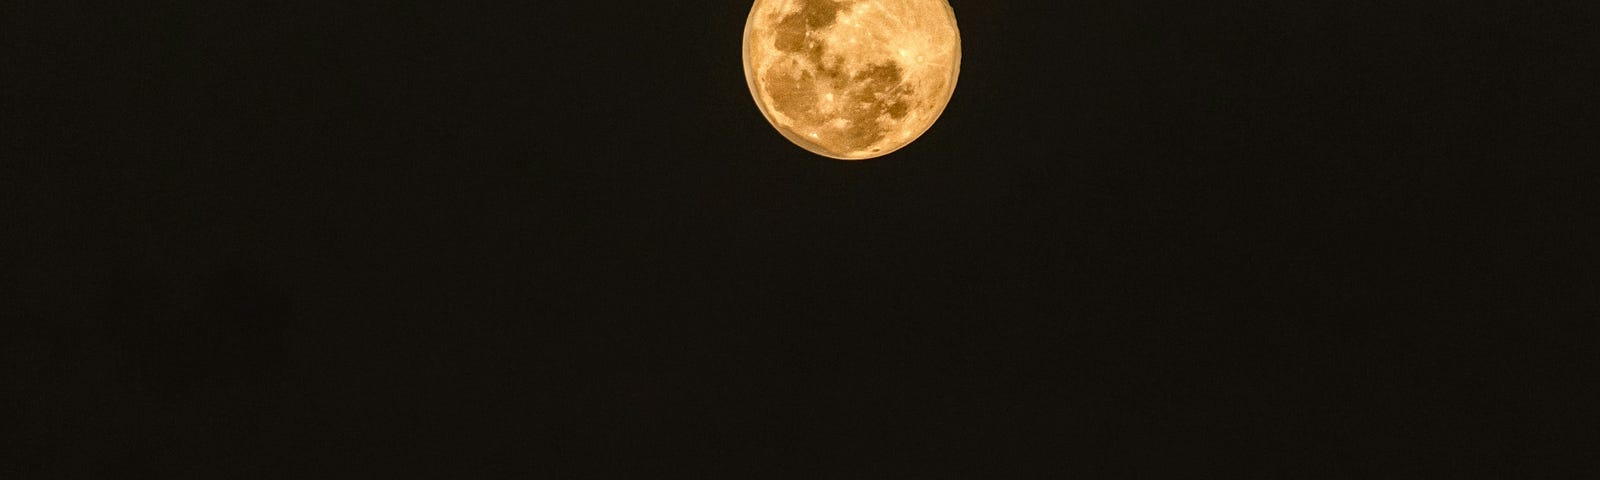 Large full moon shining on water at night.